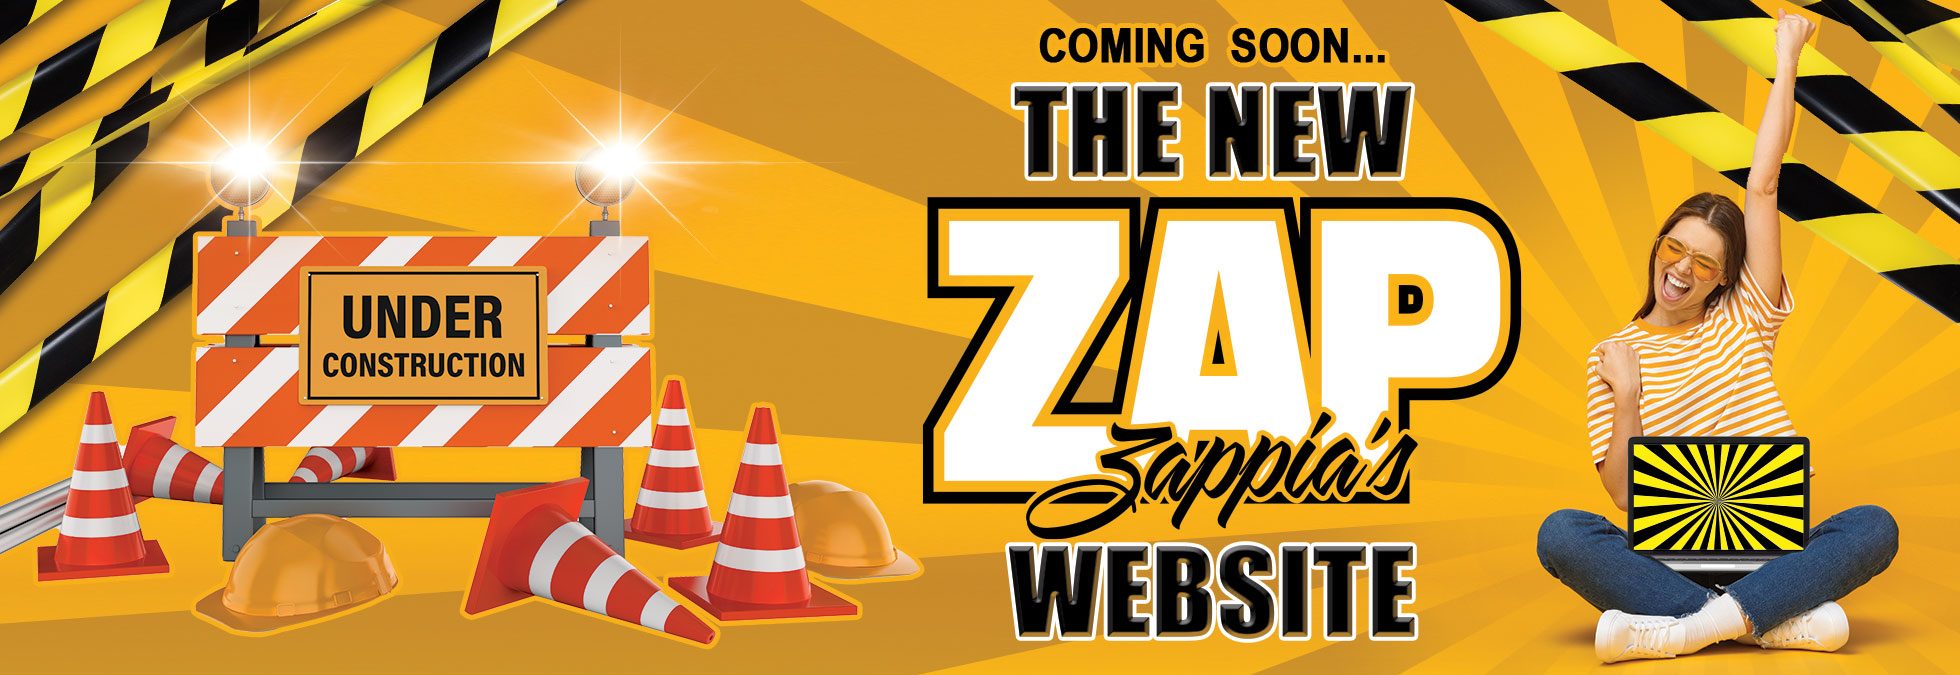 Zappia Athletics New Website Coming Soon.